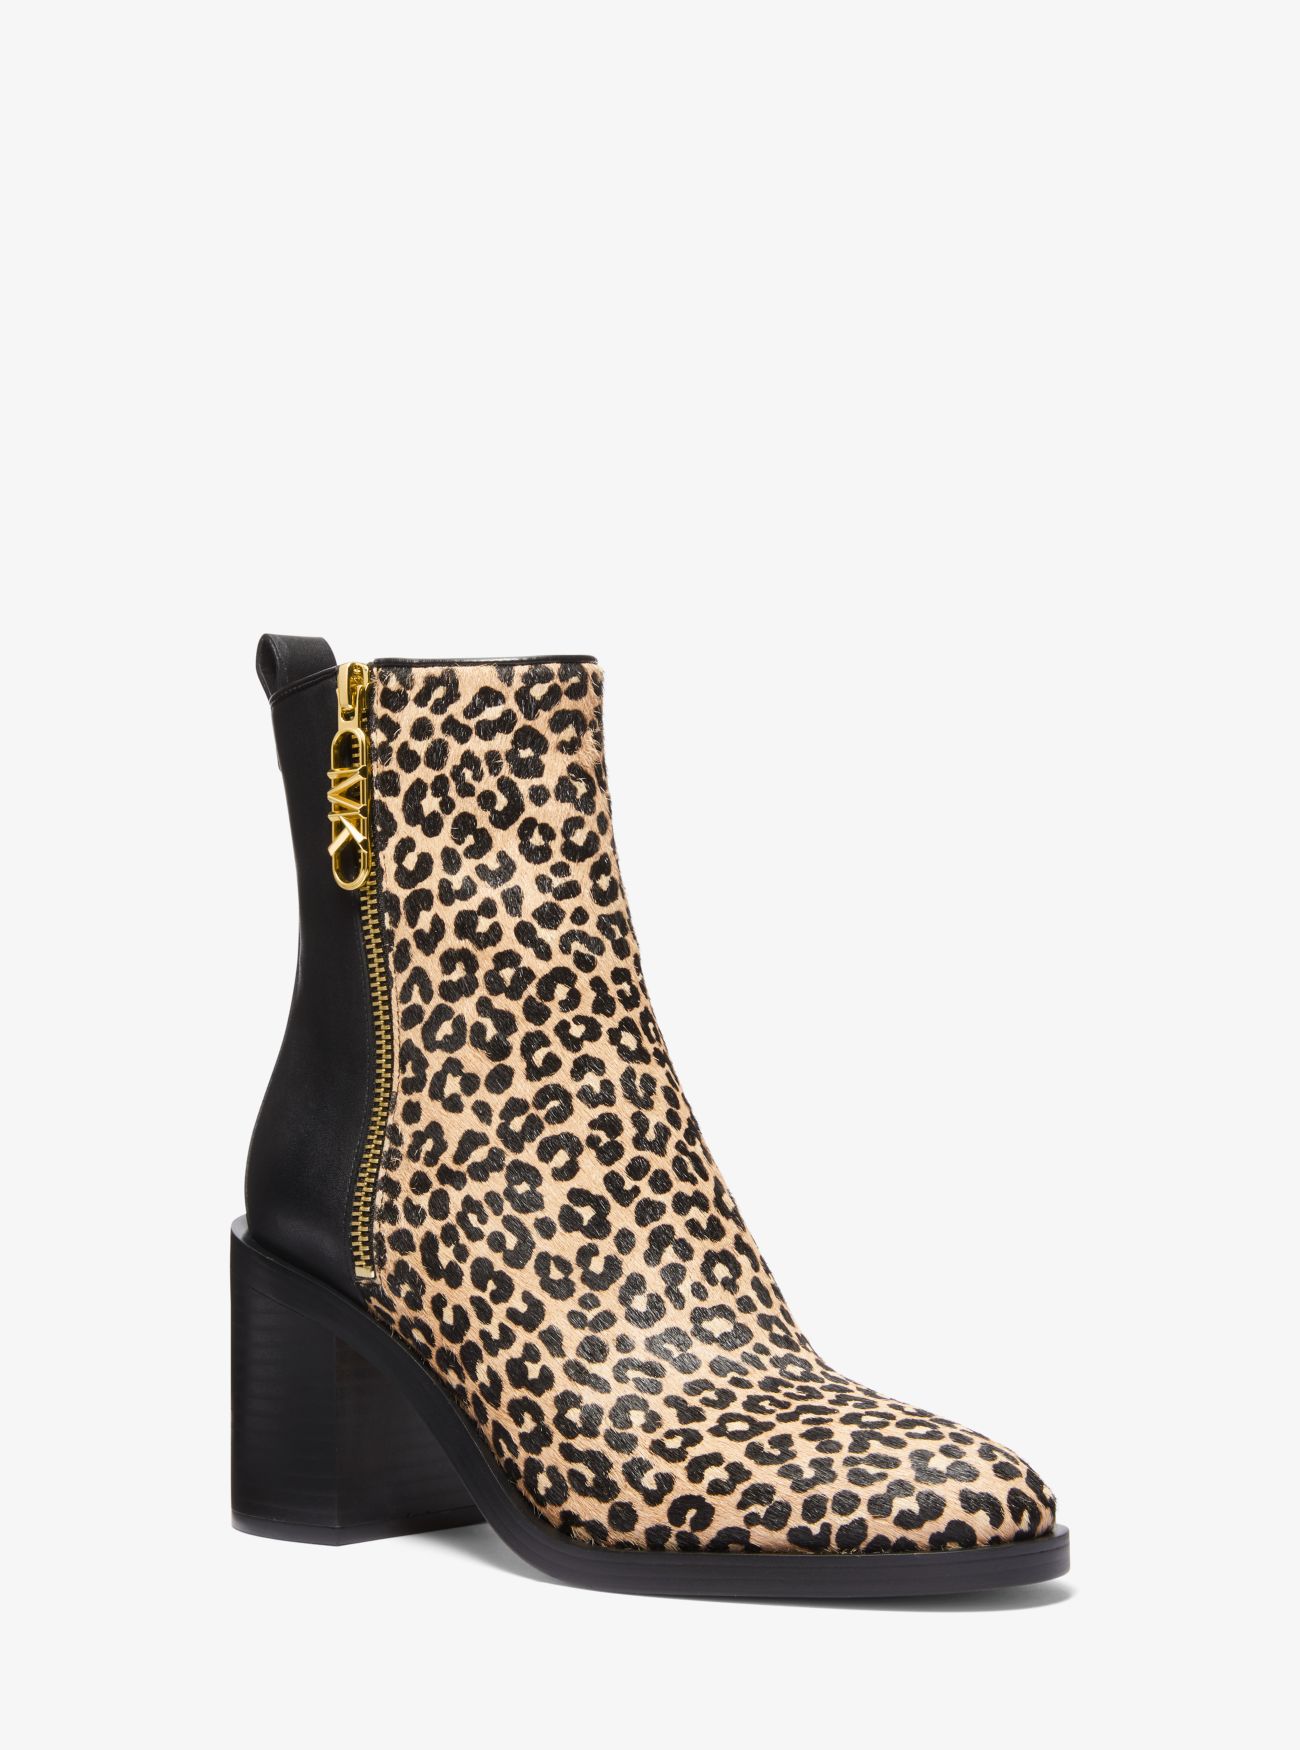 MK Regan Leopard Print Calf Hair and Leather Ankle Boot - Black - Michael Kors